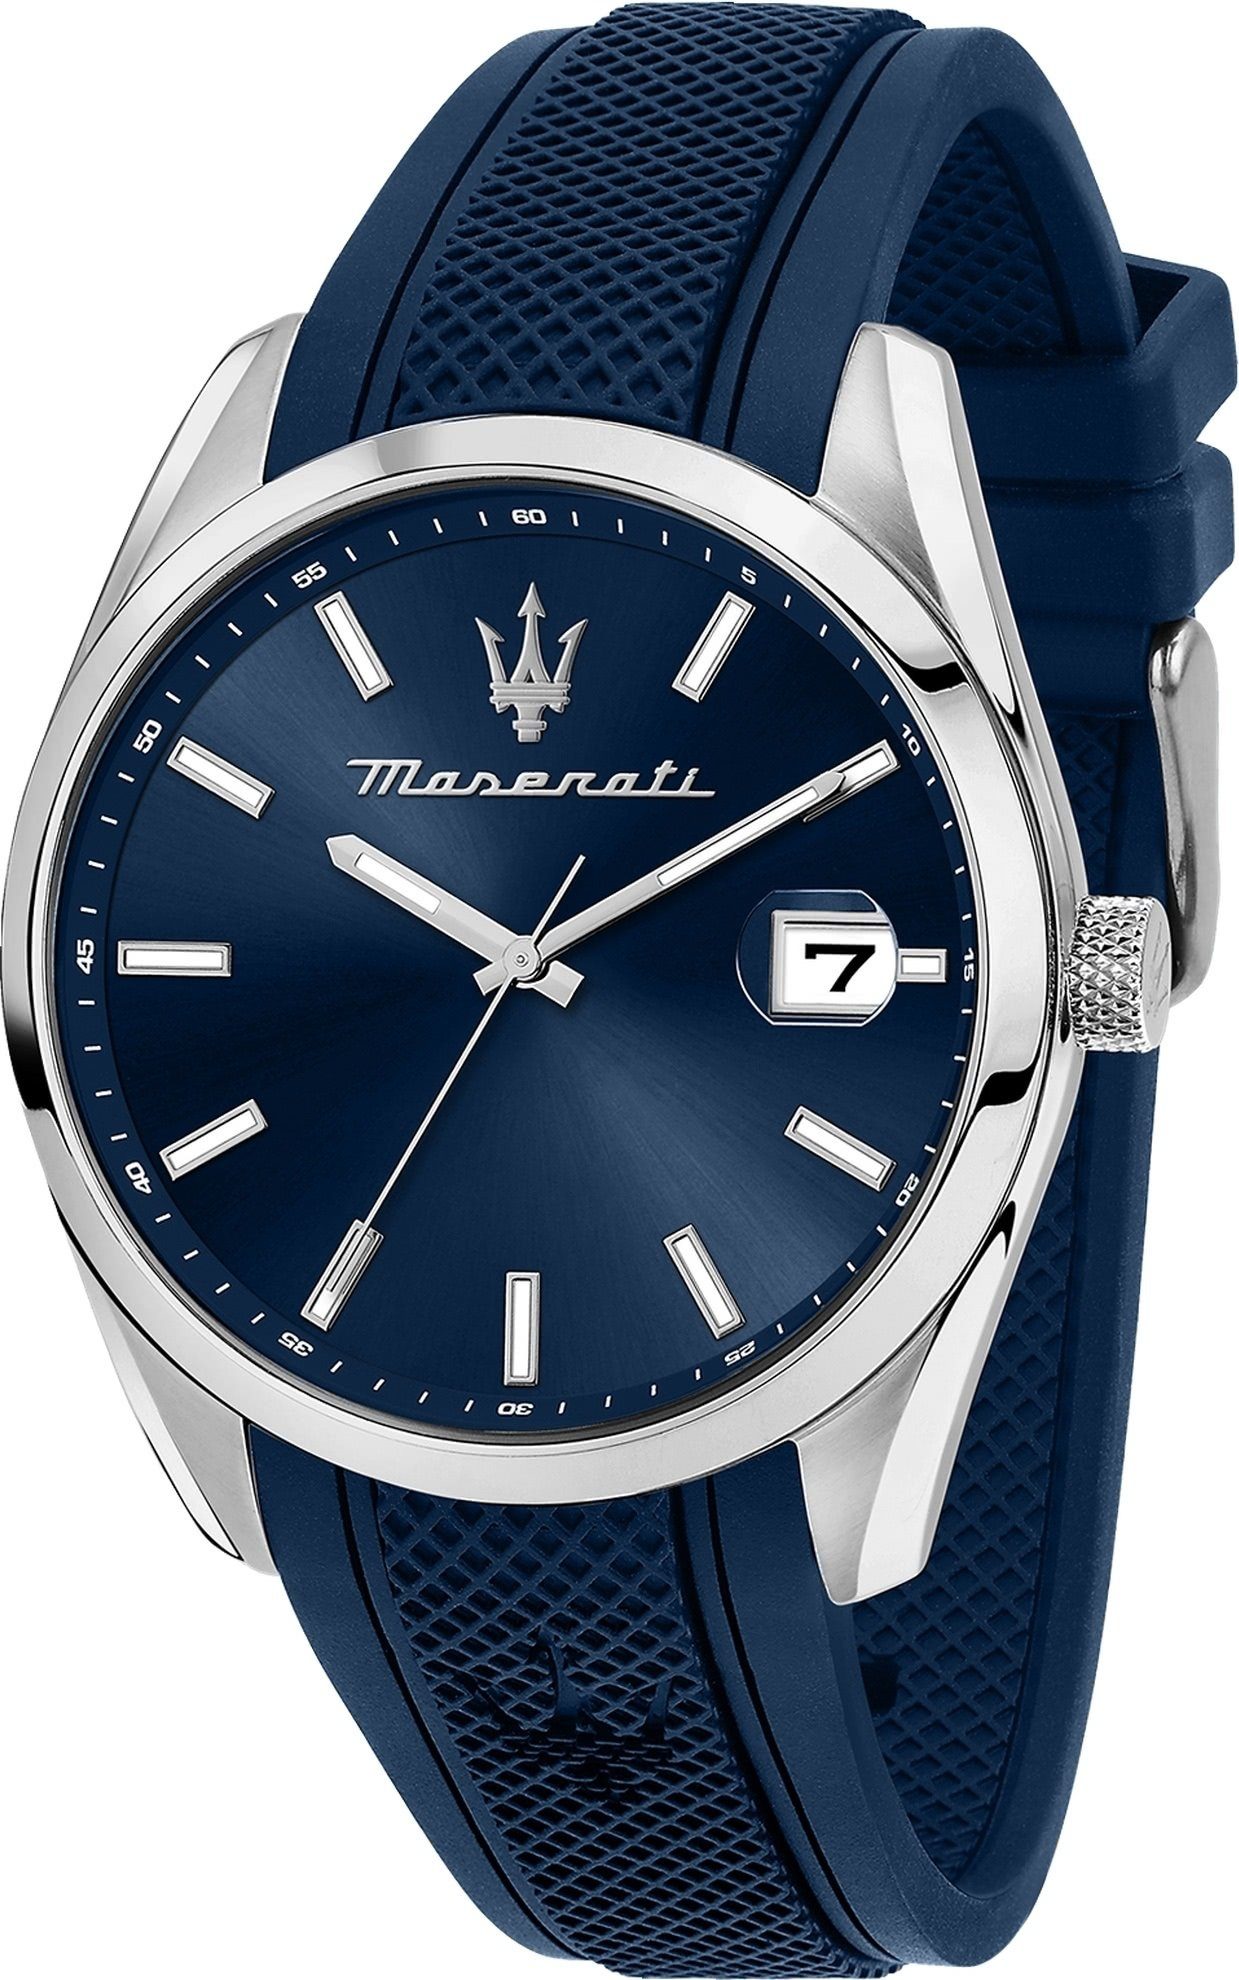 blau Maserati Herren Armband 43mm) (ca. Attrazione, groß rund, MASERATI Silikonarmband, Made-In Italy Quarzuhr Herrenuhr